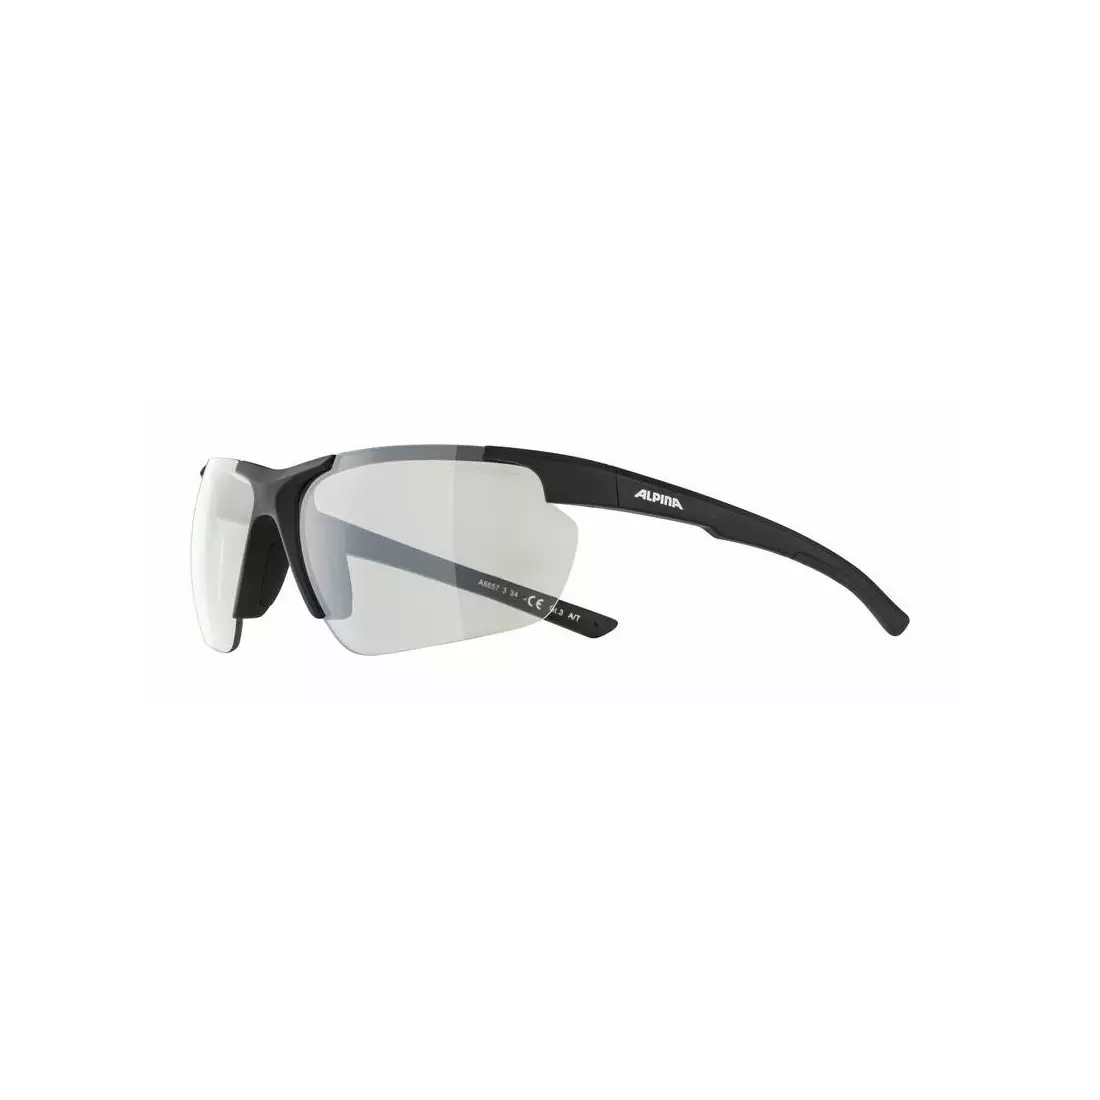 ALPINA sportovní brýle DEFFY HR CLEAR MIRROR S1 black matt A8657334